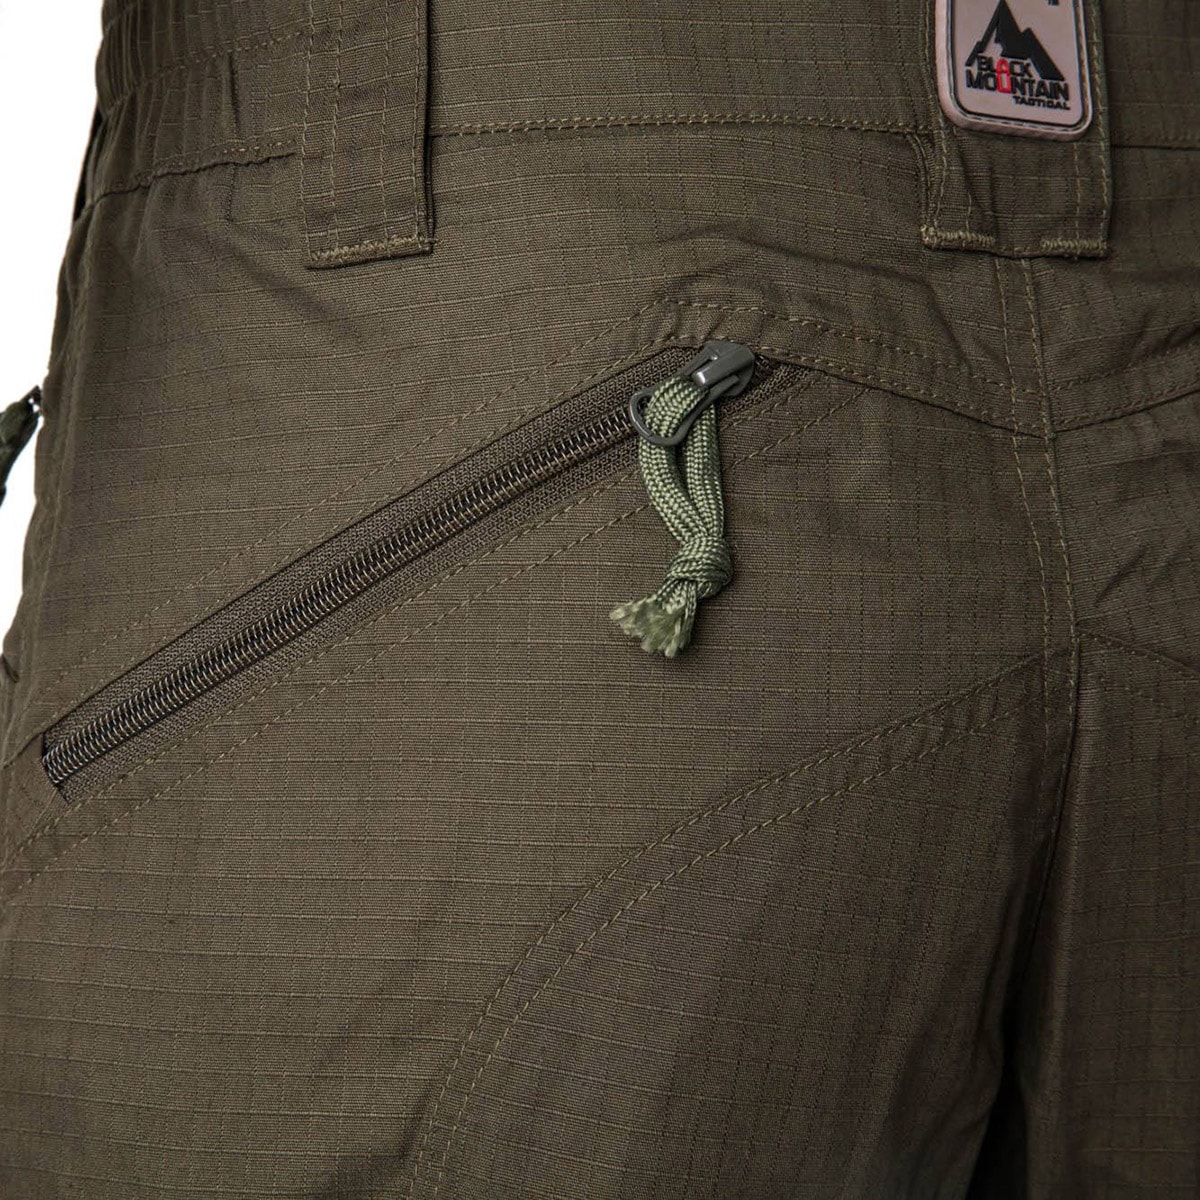 Spodnie Black Mountain Tactical Cedar Combat Pants - Olive